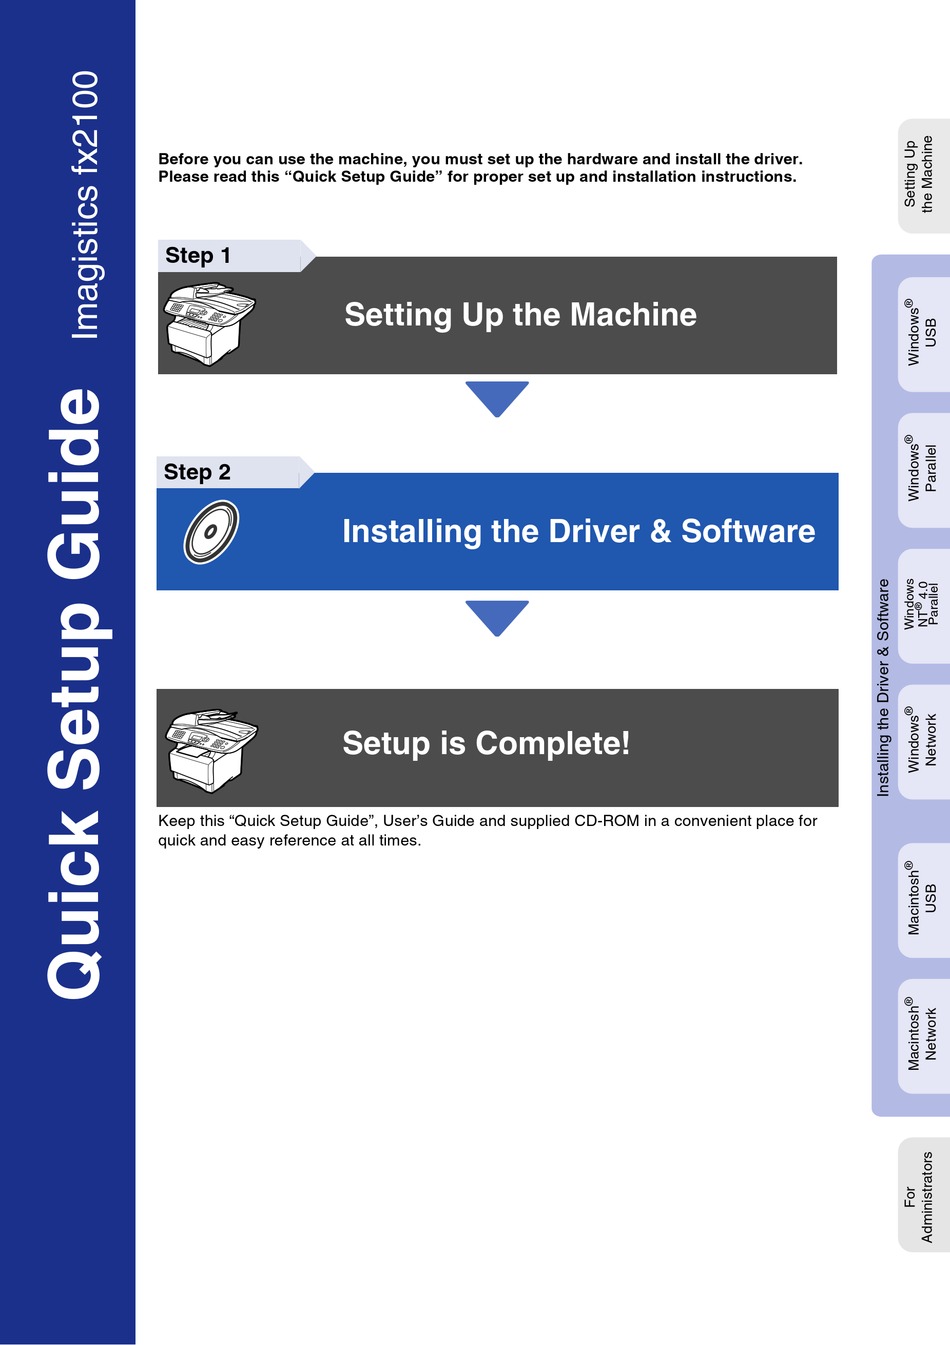 Download imagistics multifunction devices driver installer